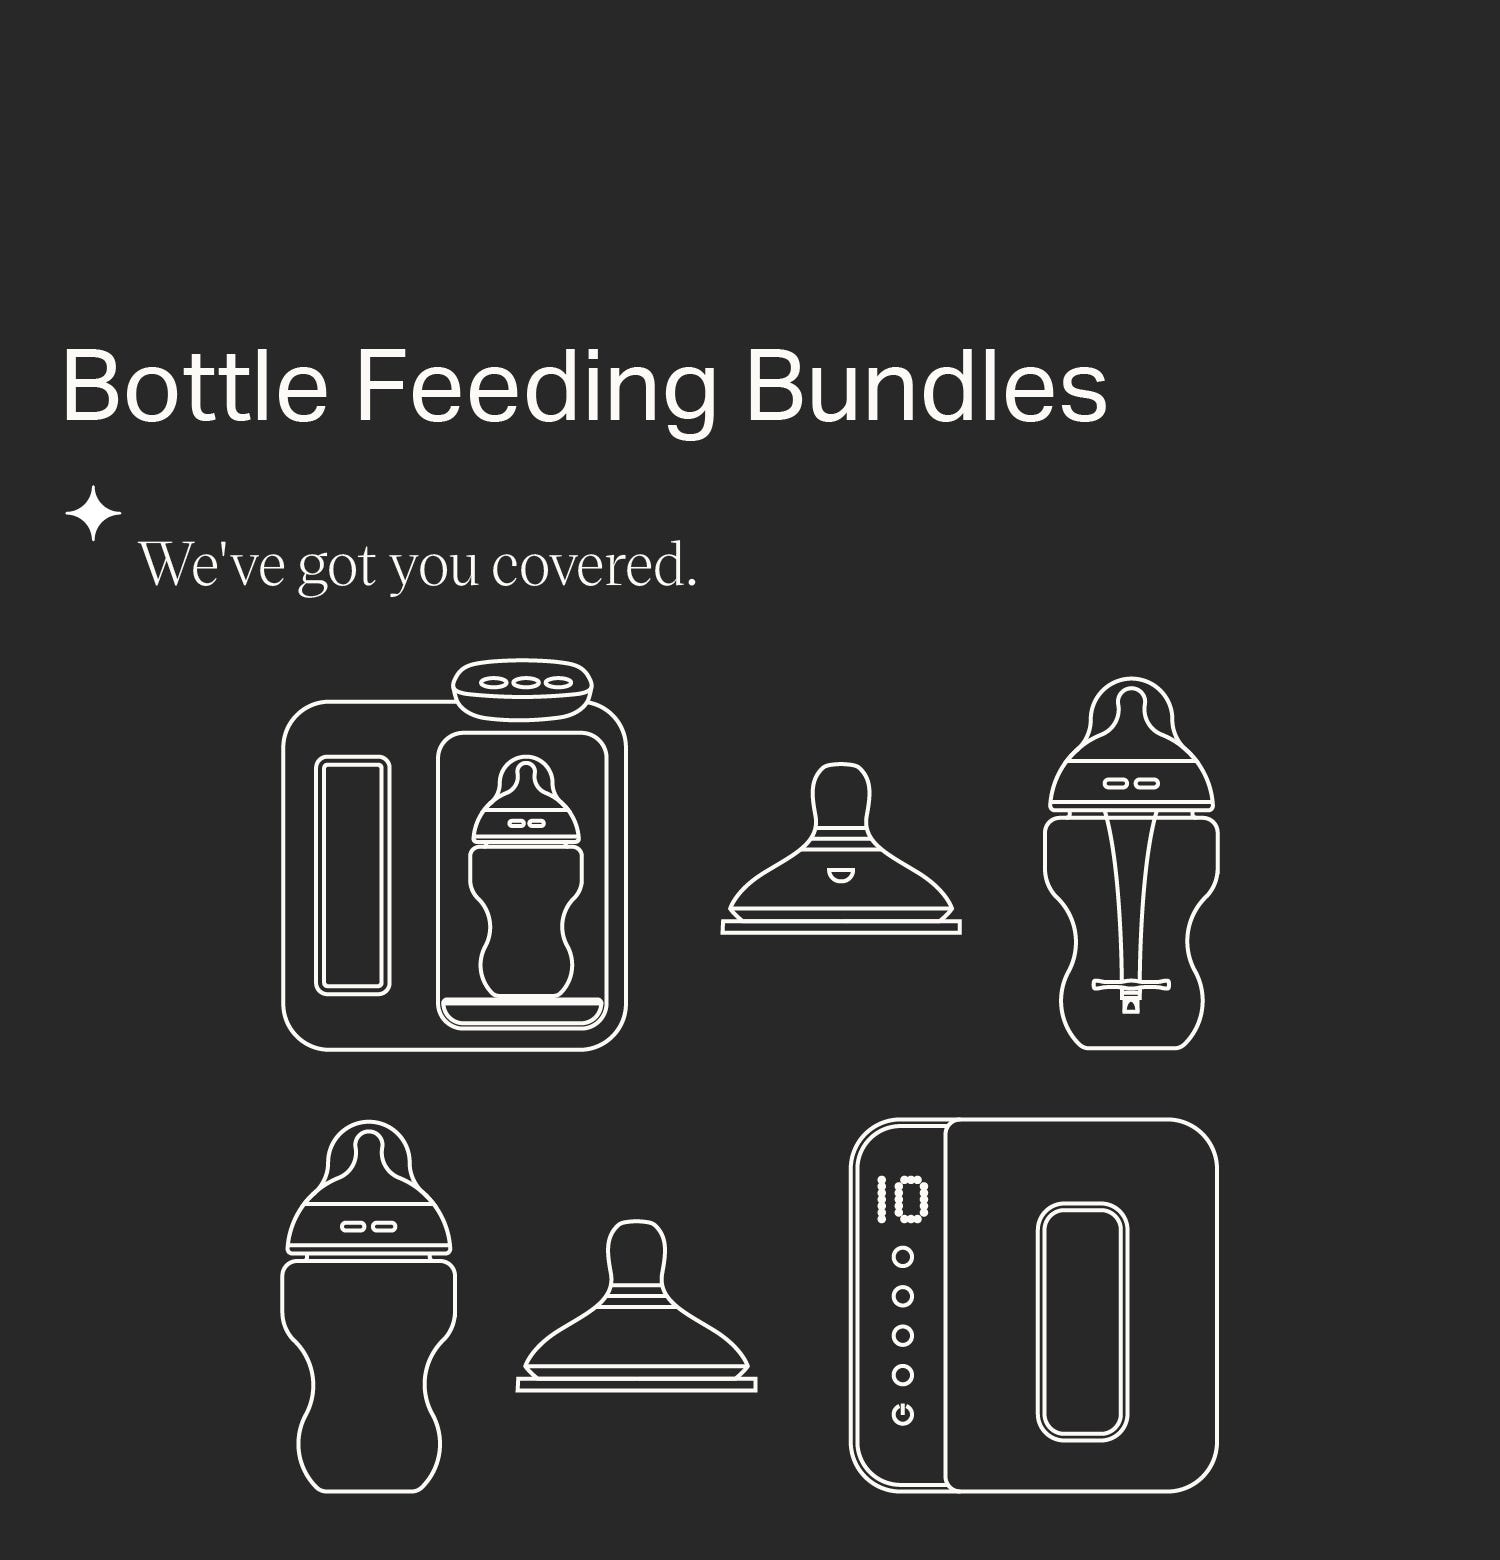 Bottle Feeding Bundles